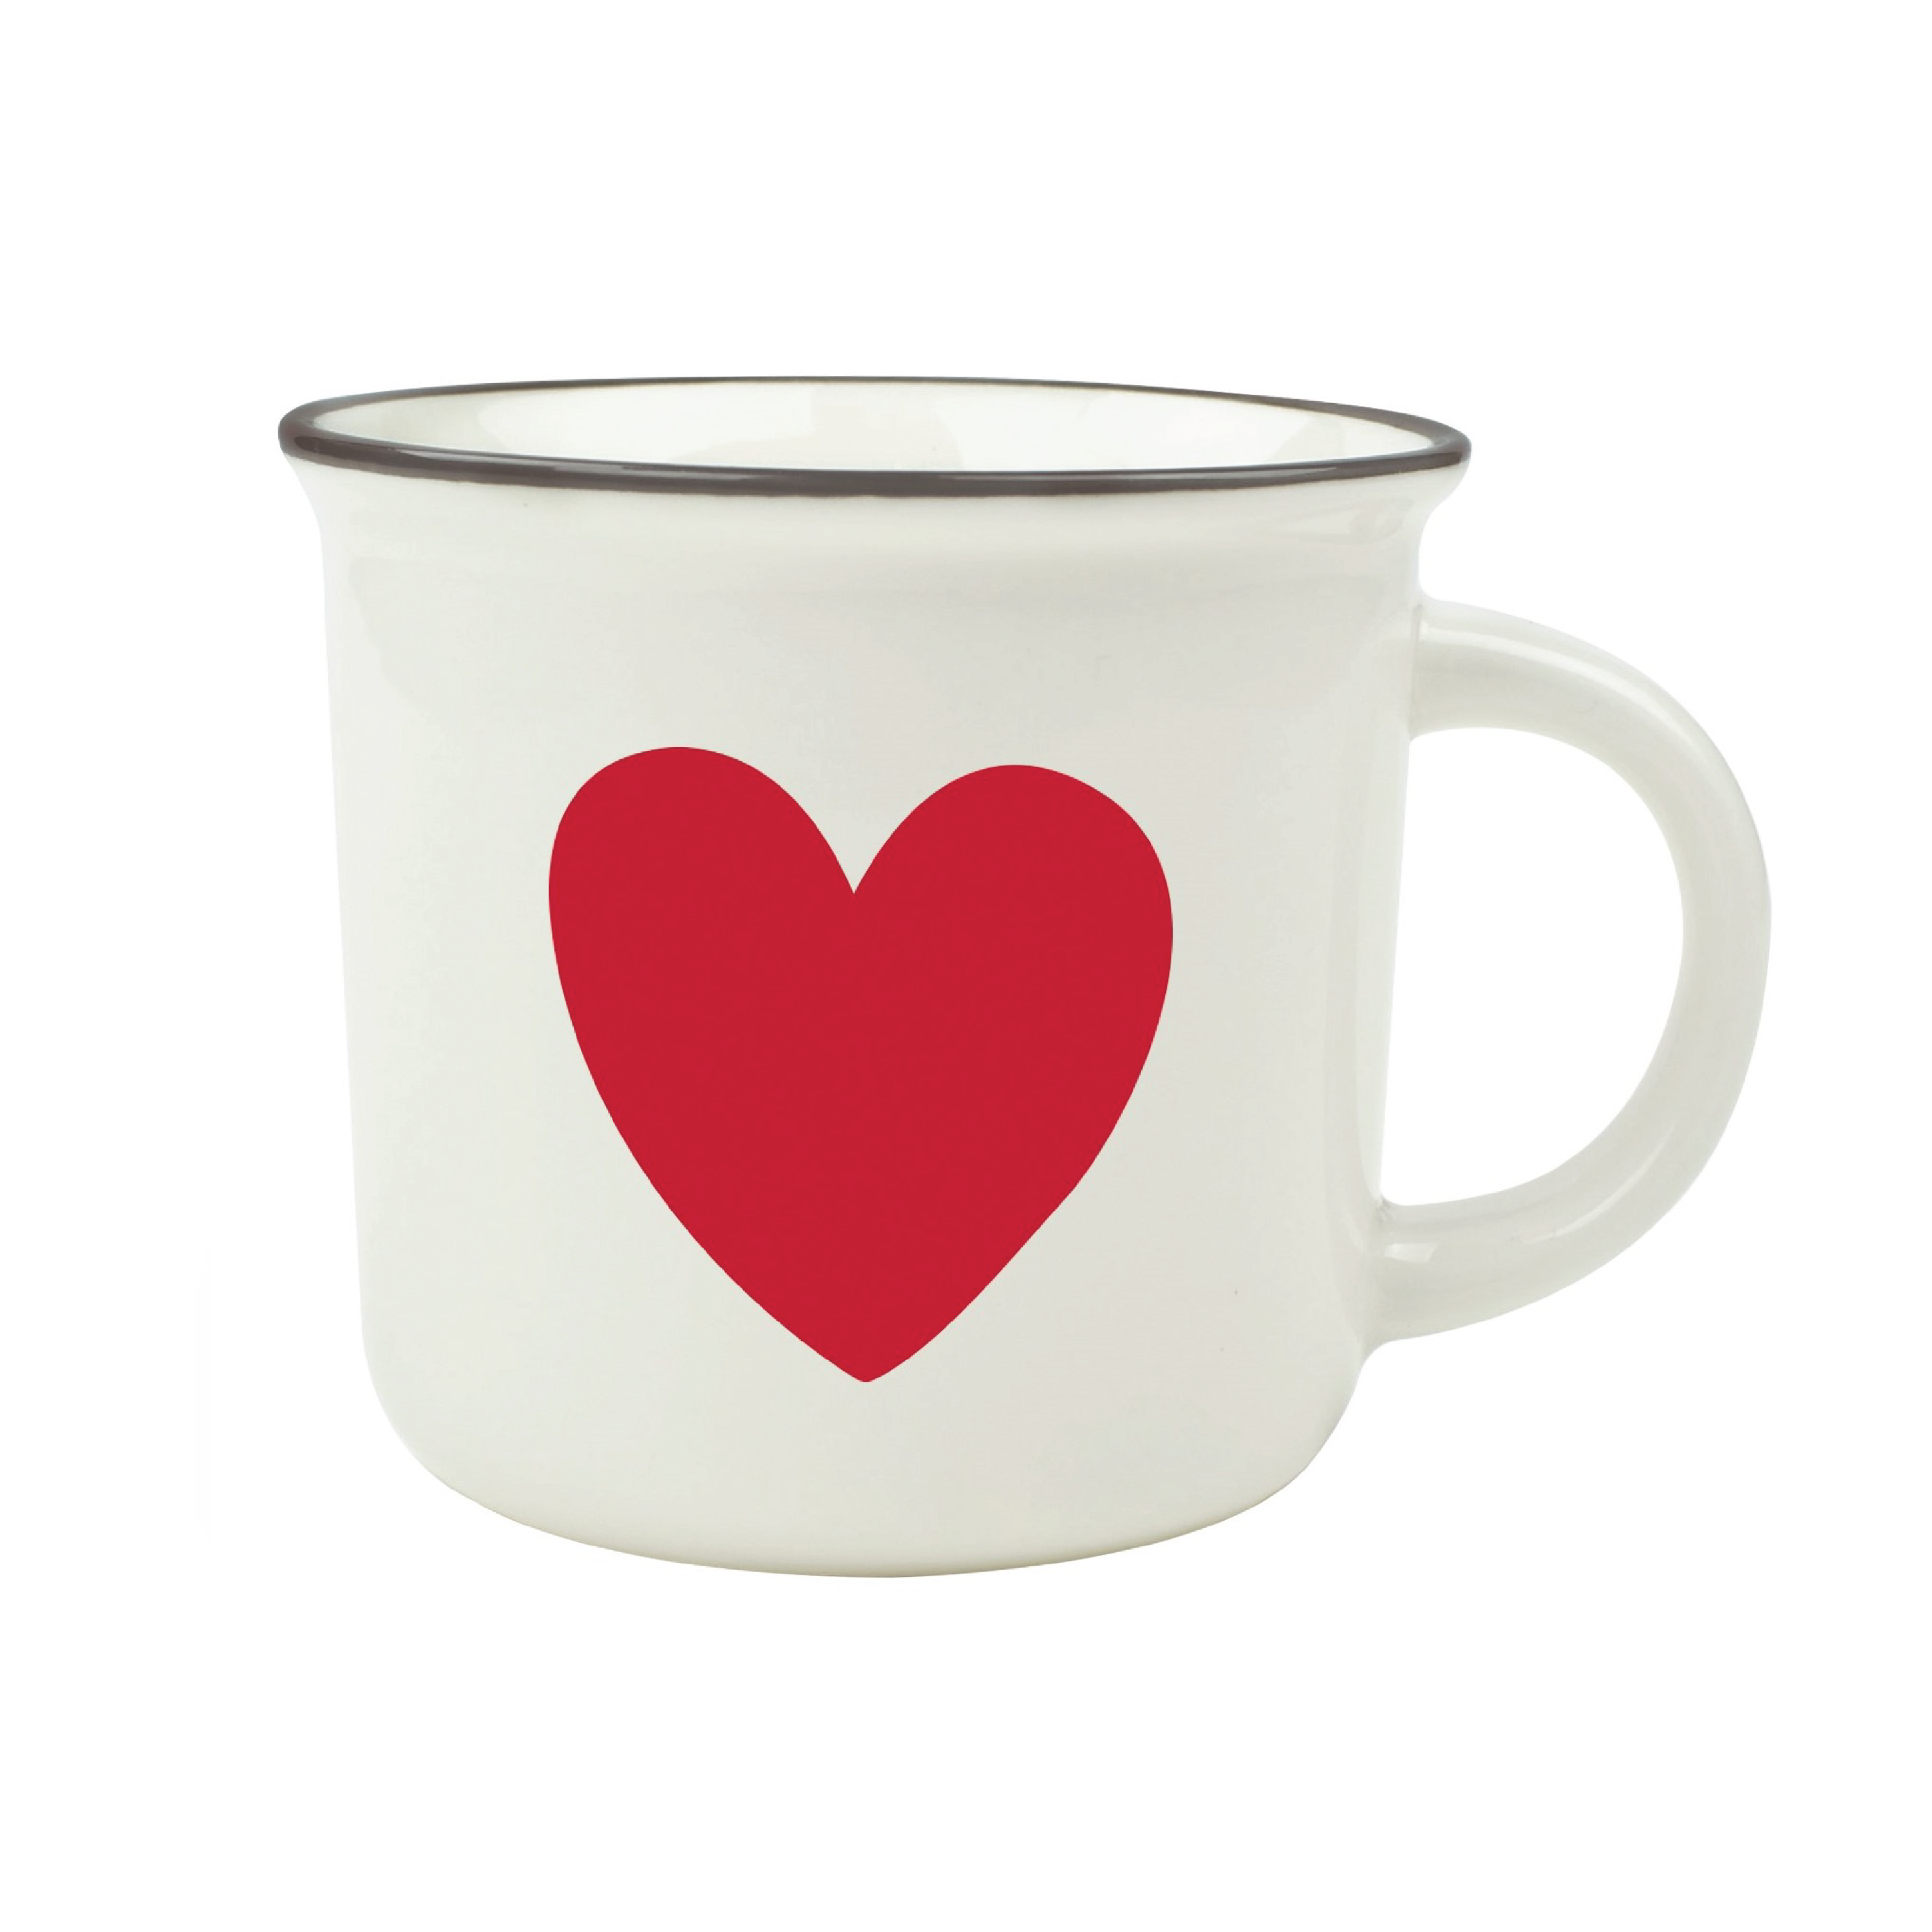 LEGAMI "Heart" Cup-puccino krus, 350 ml, 1 stk.